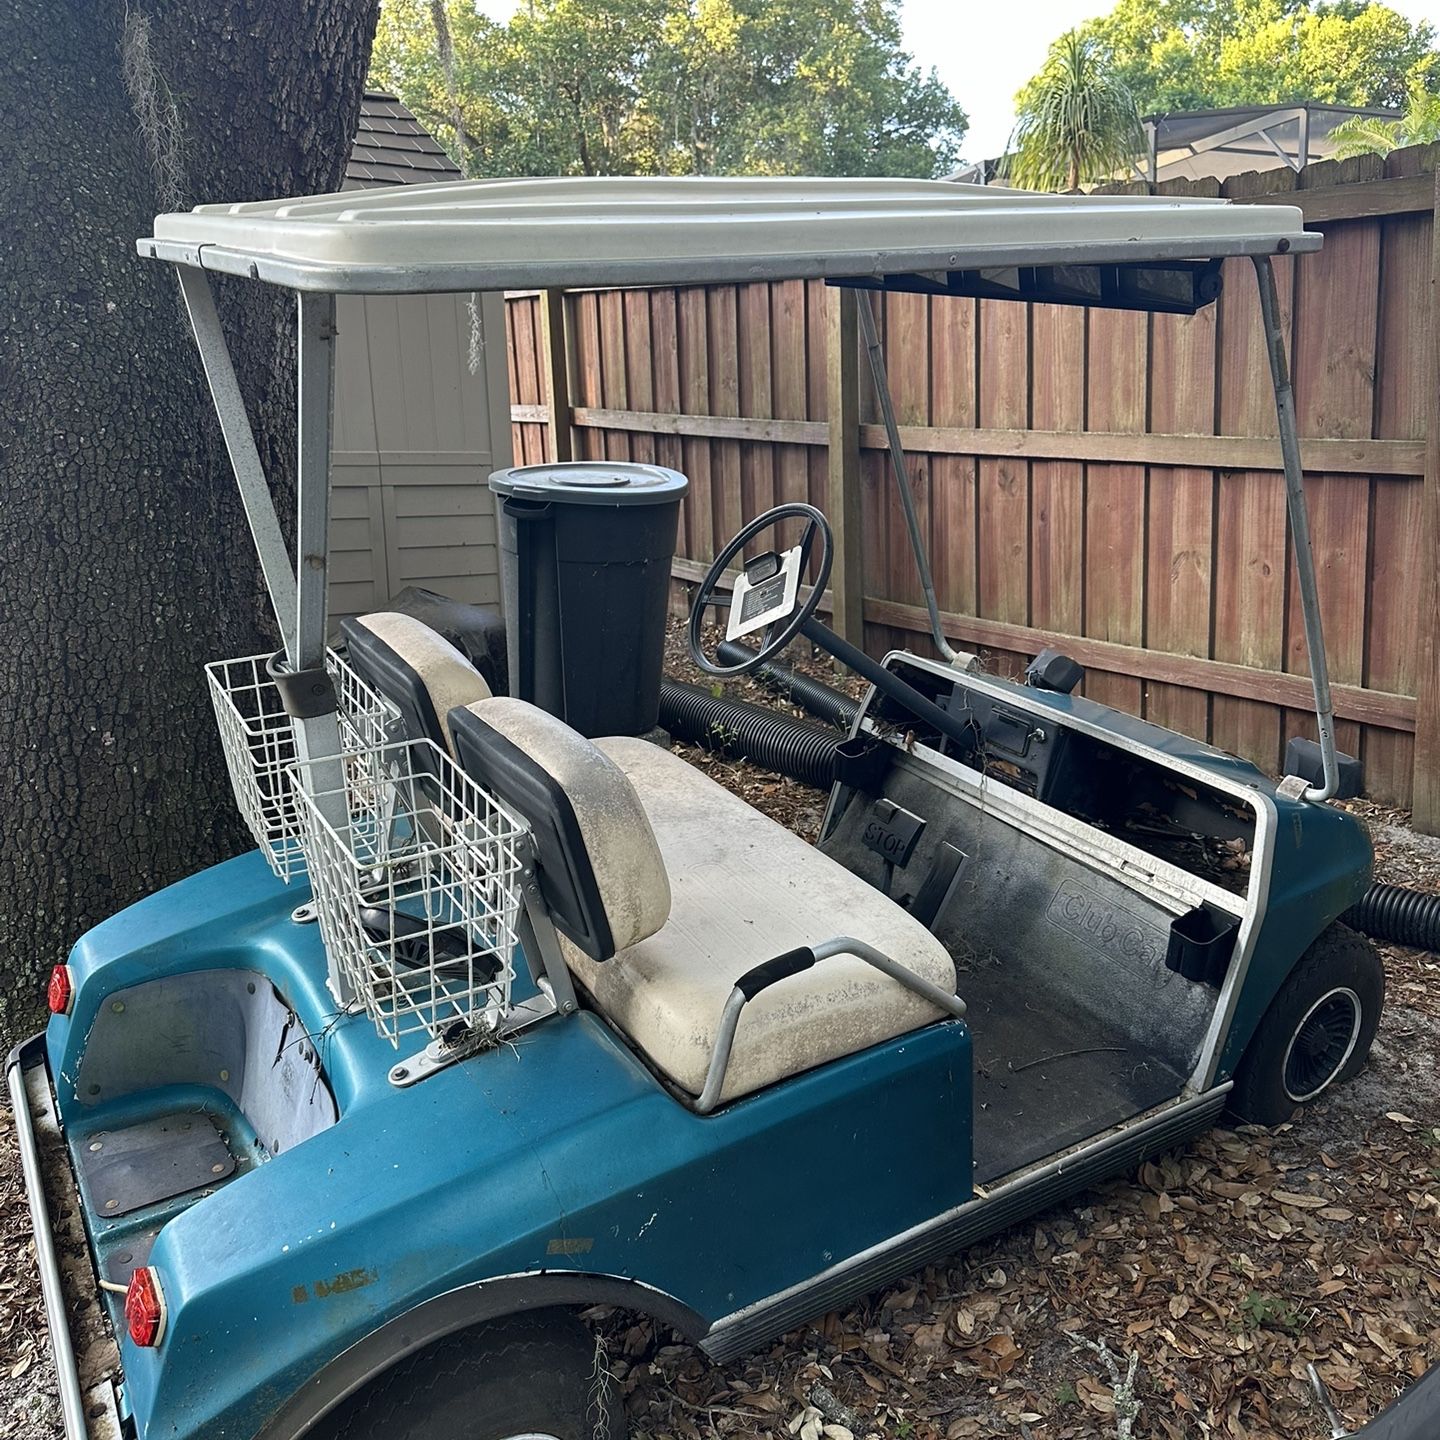 Club Car DS Golf Cart Project!